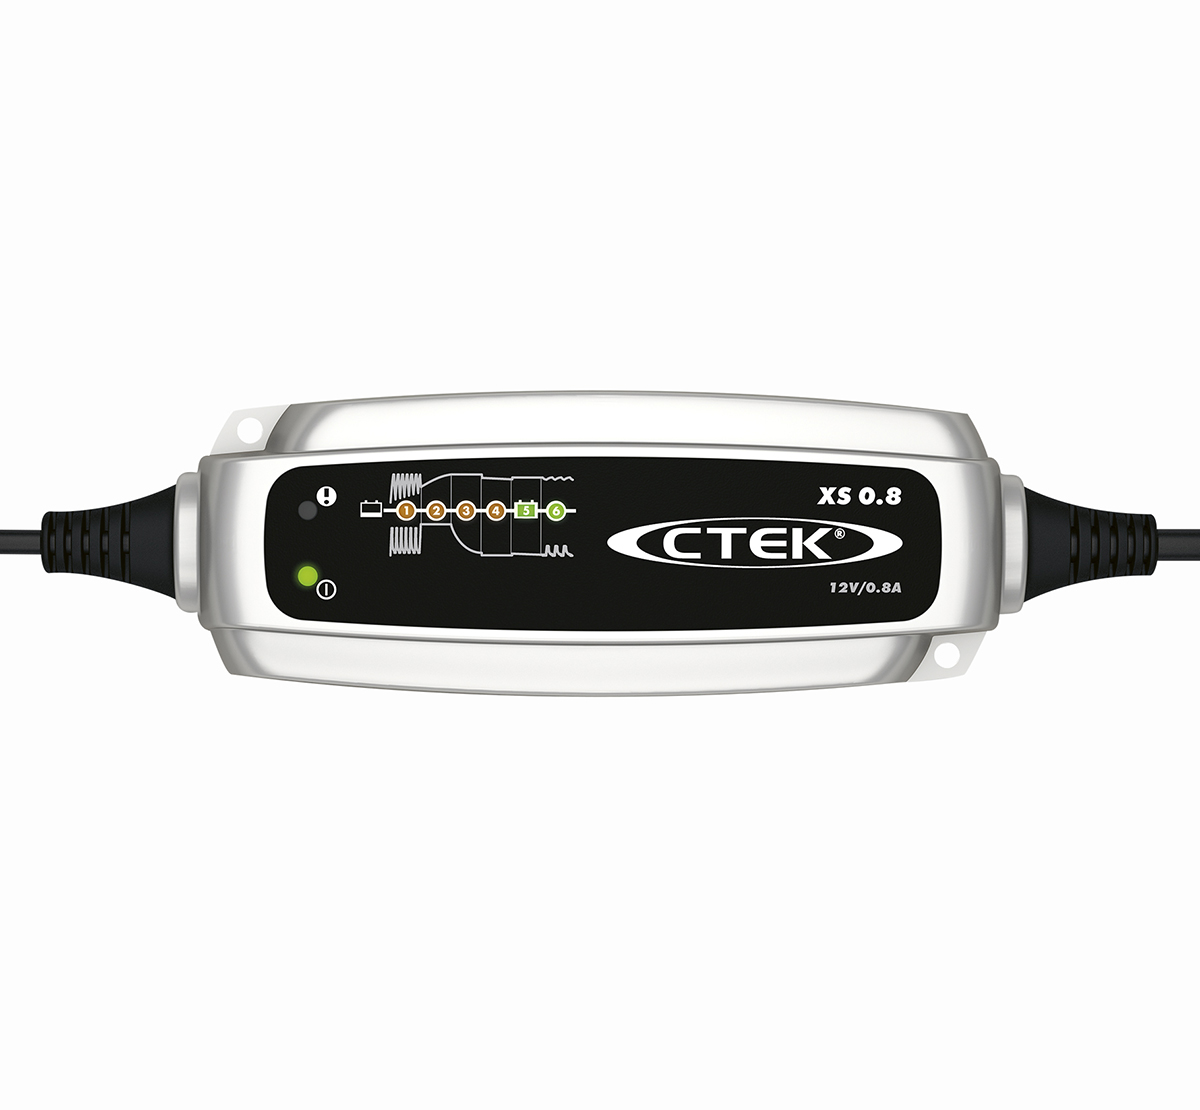 CTEK XS 0.8 12V 0.8A Battery Charger